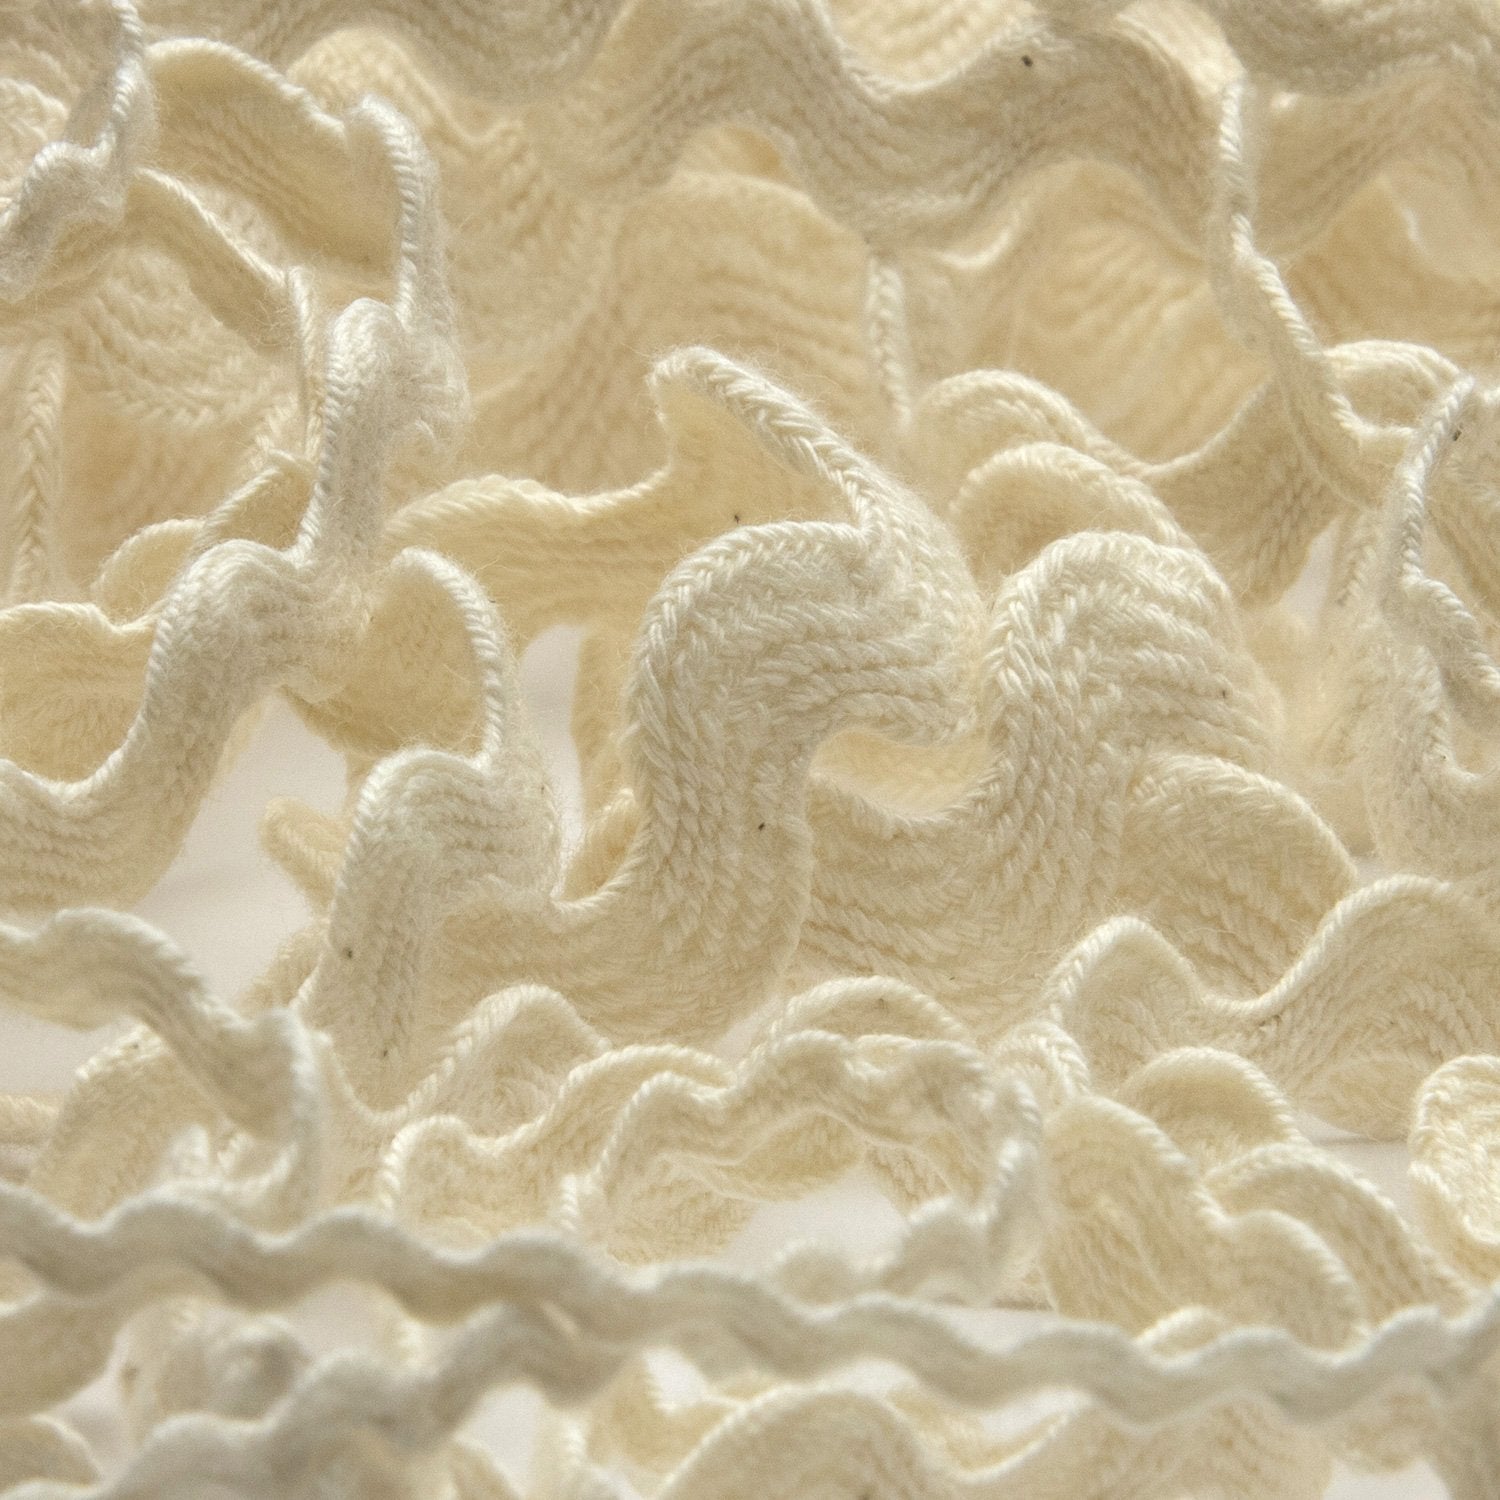 FUJIYAMA RIBBON [Wholesale] Organic Cotton Zig-Zag Tape approx.5mm Ecru 30 Meters Roll